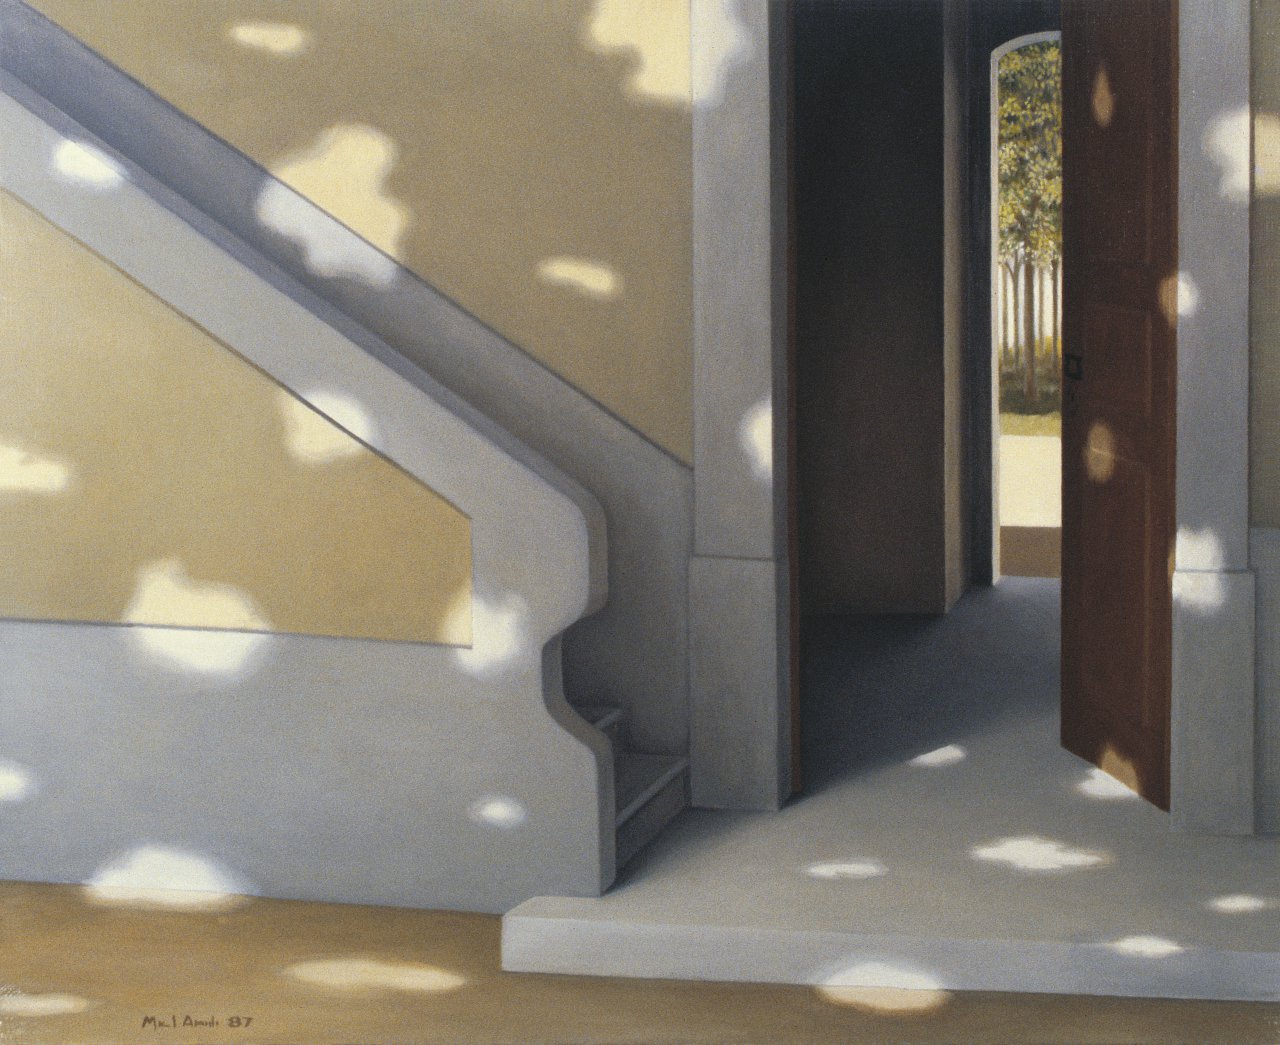 Escada e porta com sombras